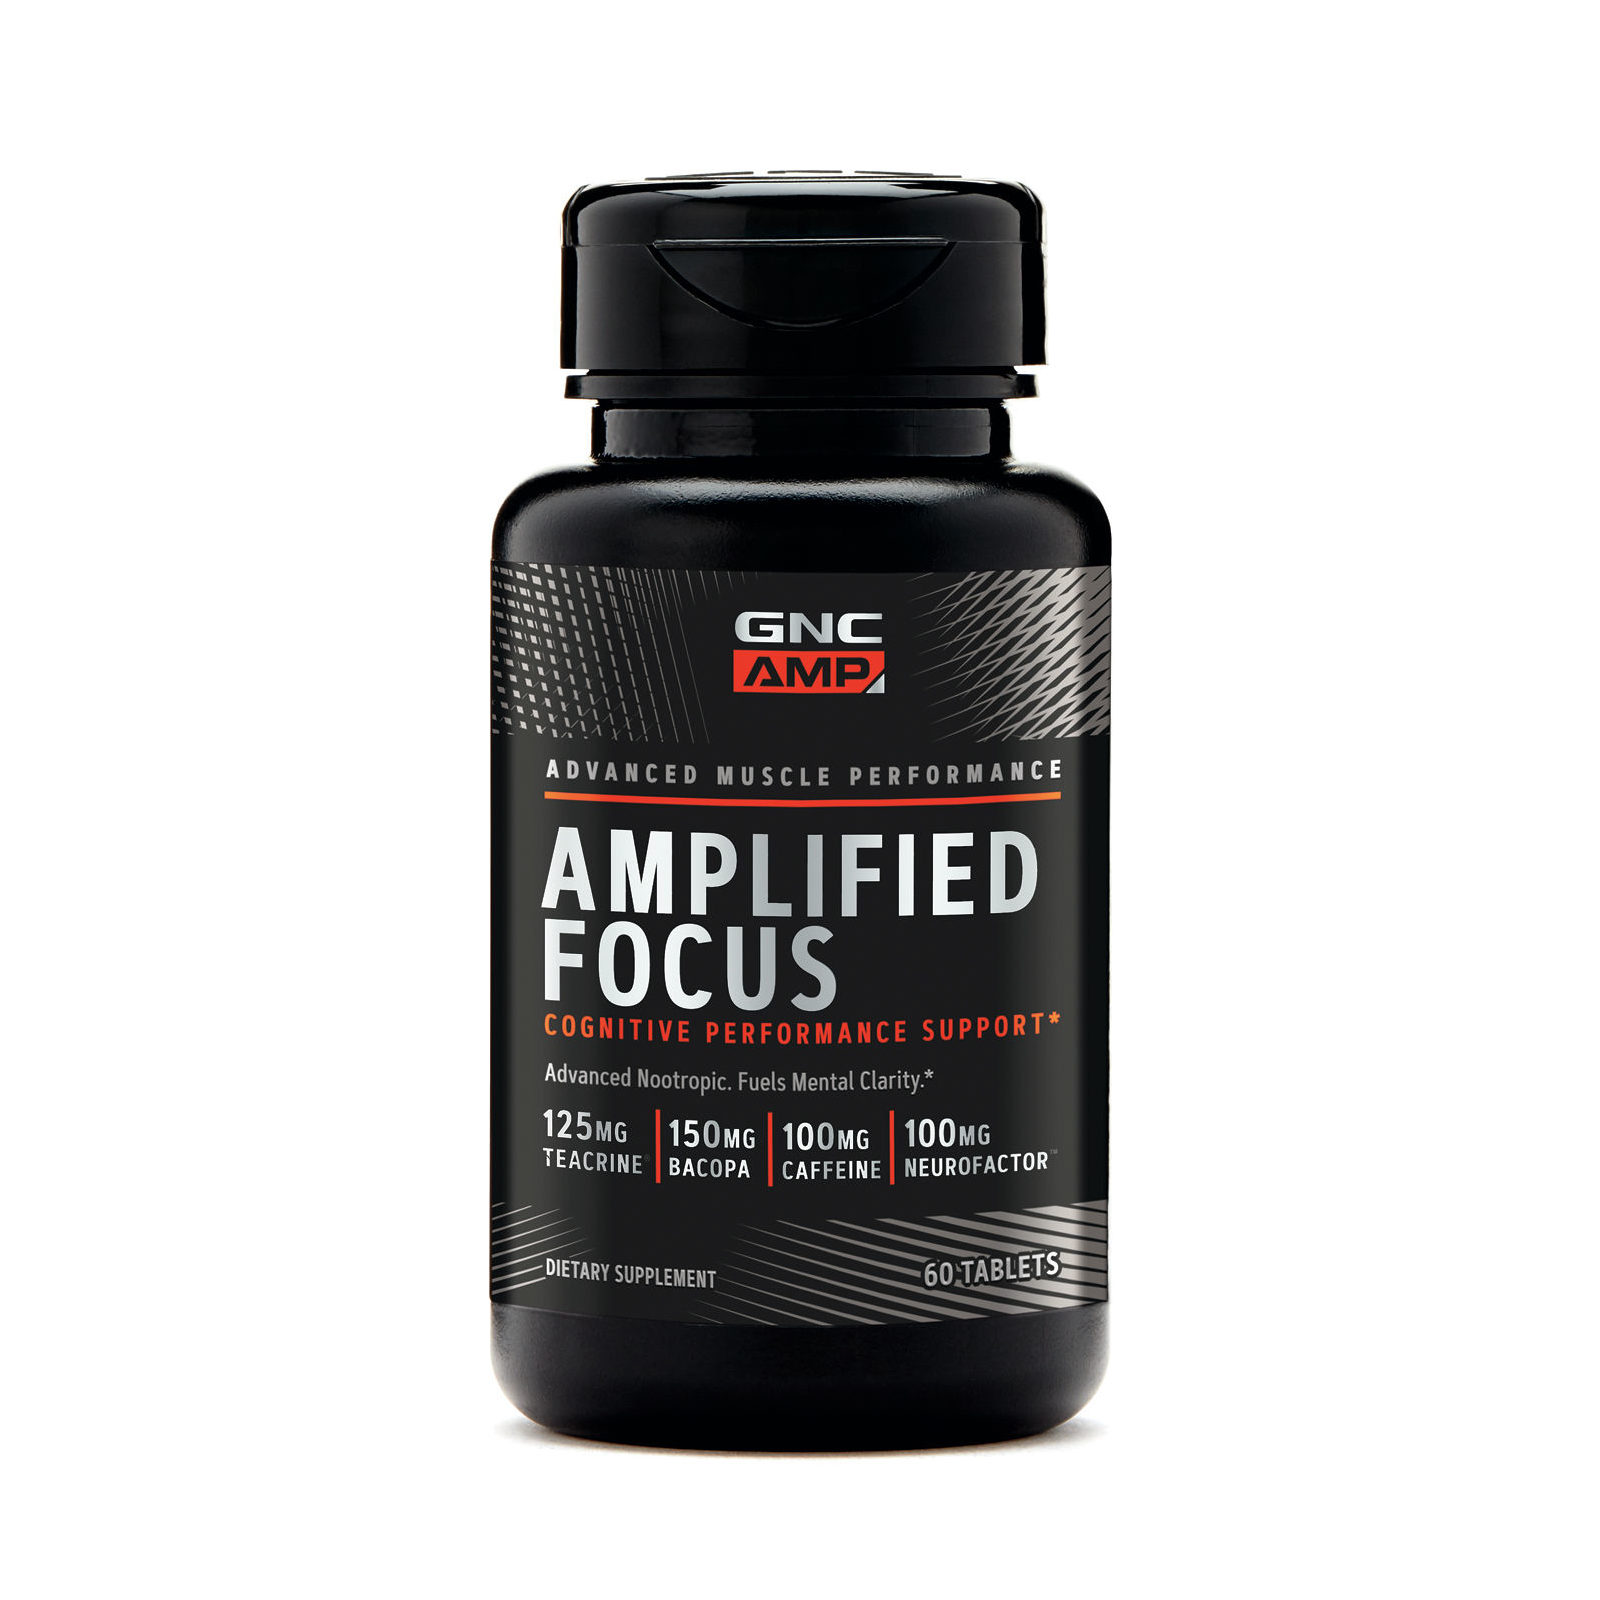 GNC AMP Amplified Focus Review